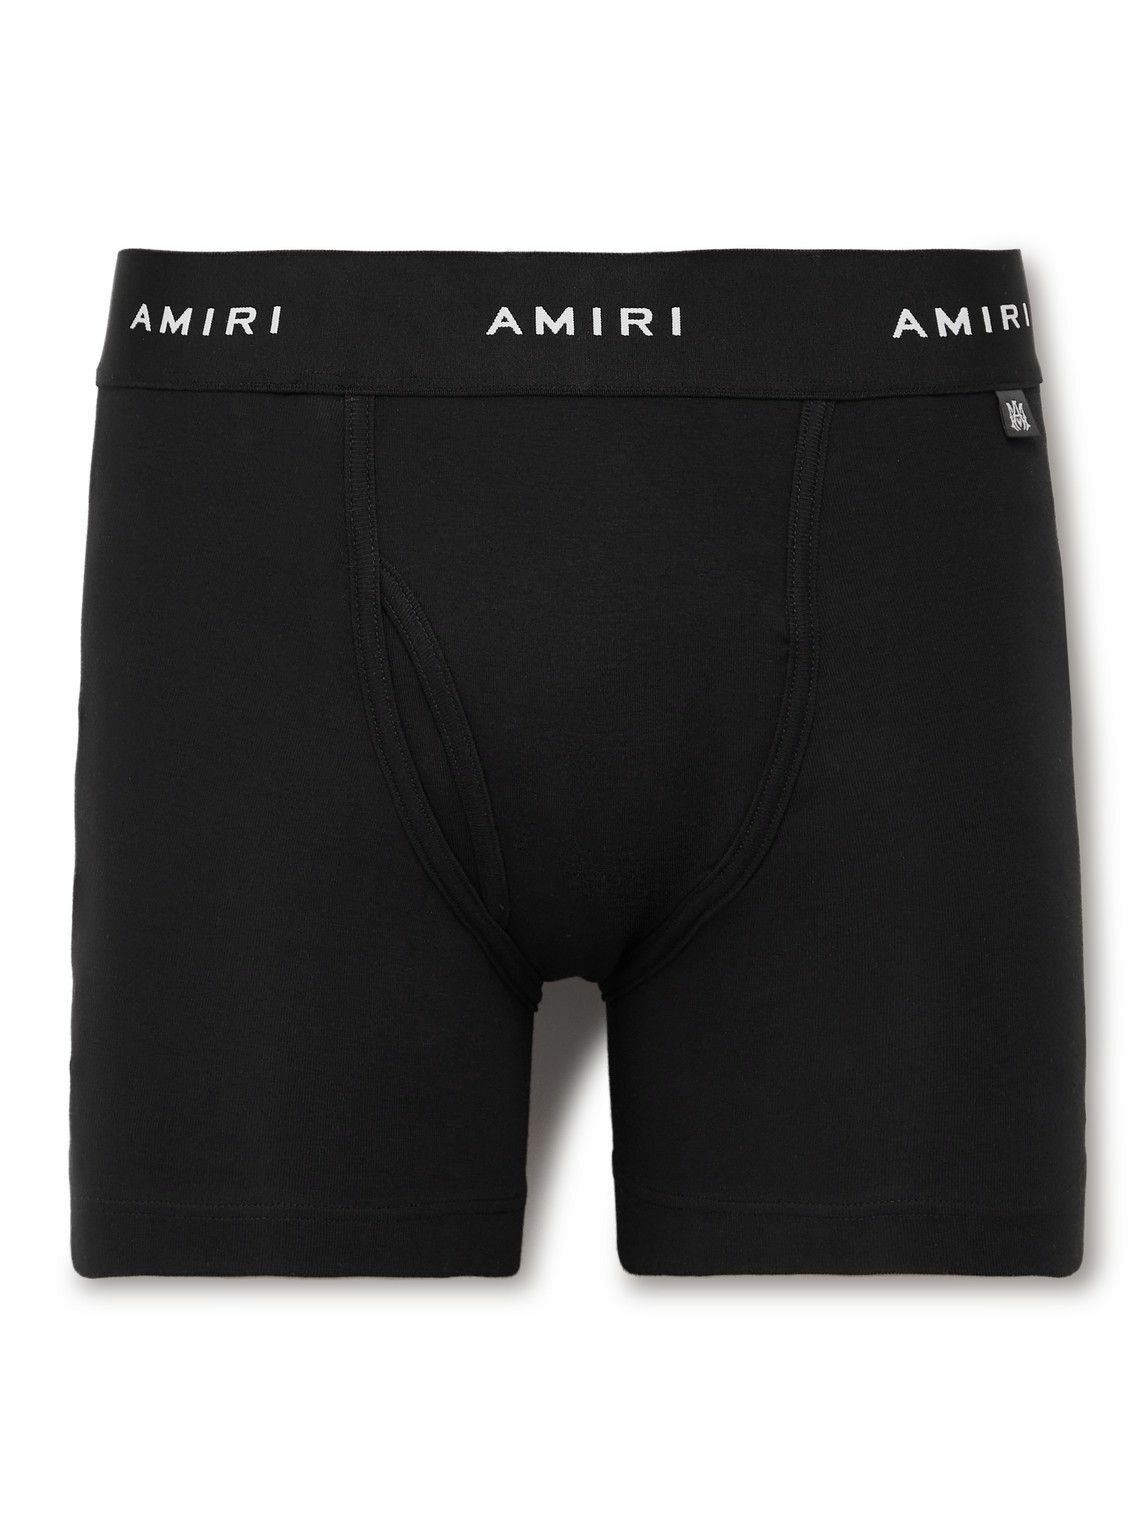 AMIRI - Stretch-Cotton Boxer Briefs - Black Amiri